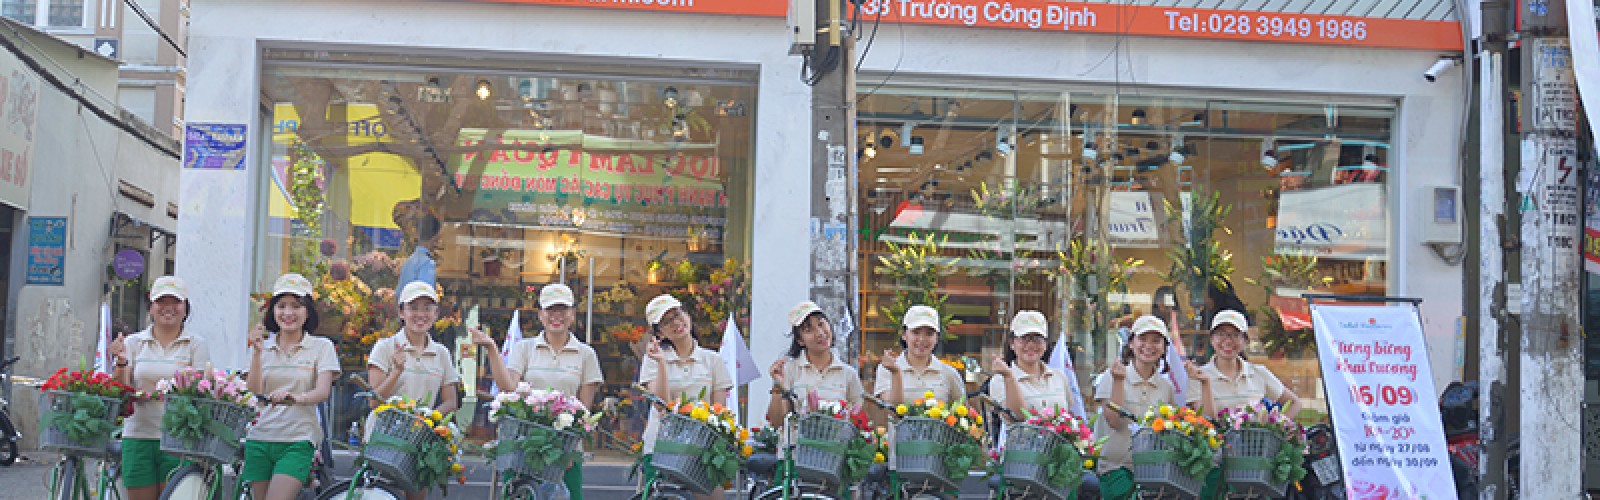 Dalat Hasfarm to open a new flower shop in Tan Binh district, HCMC.